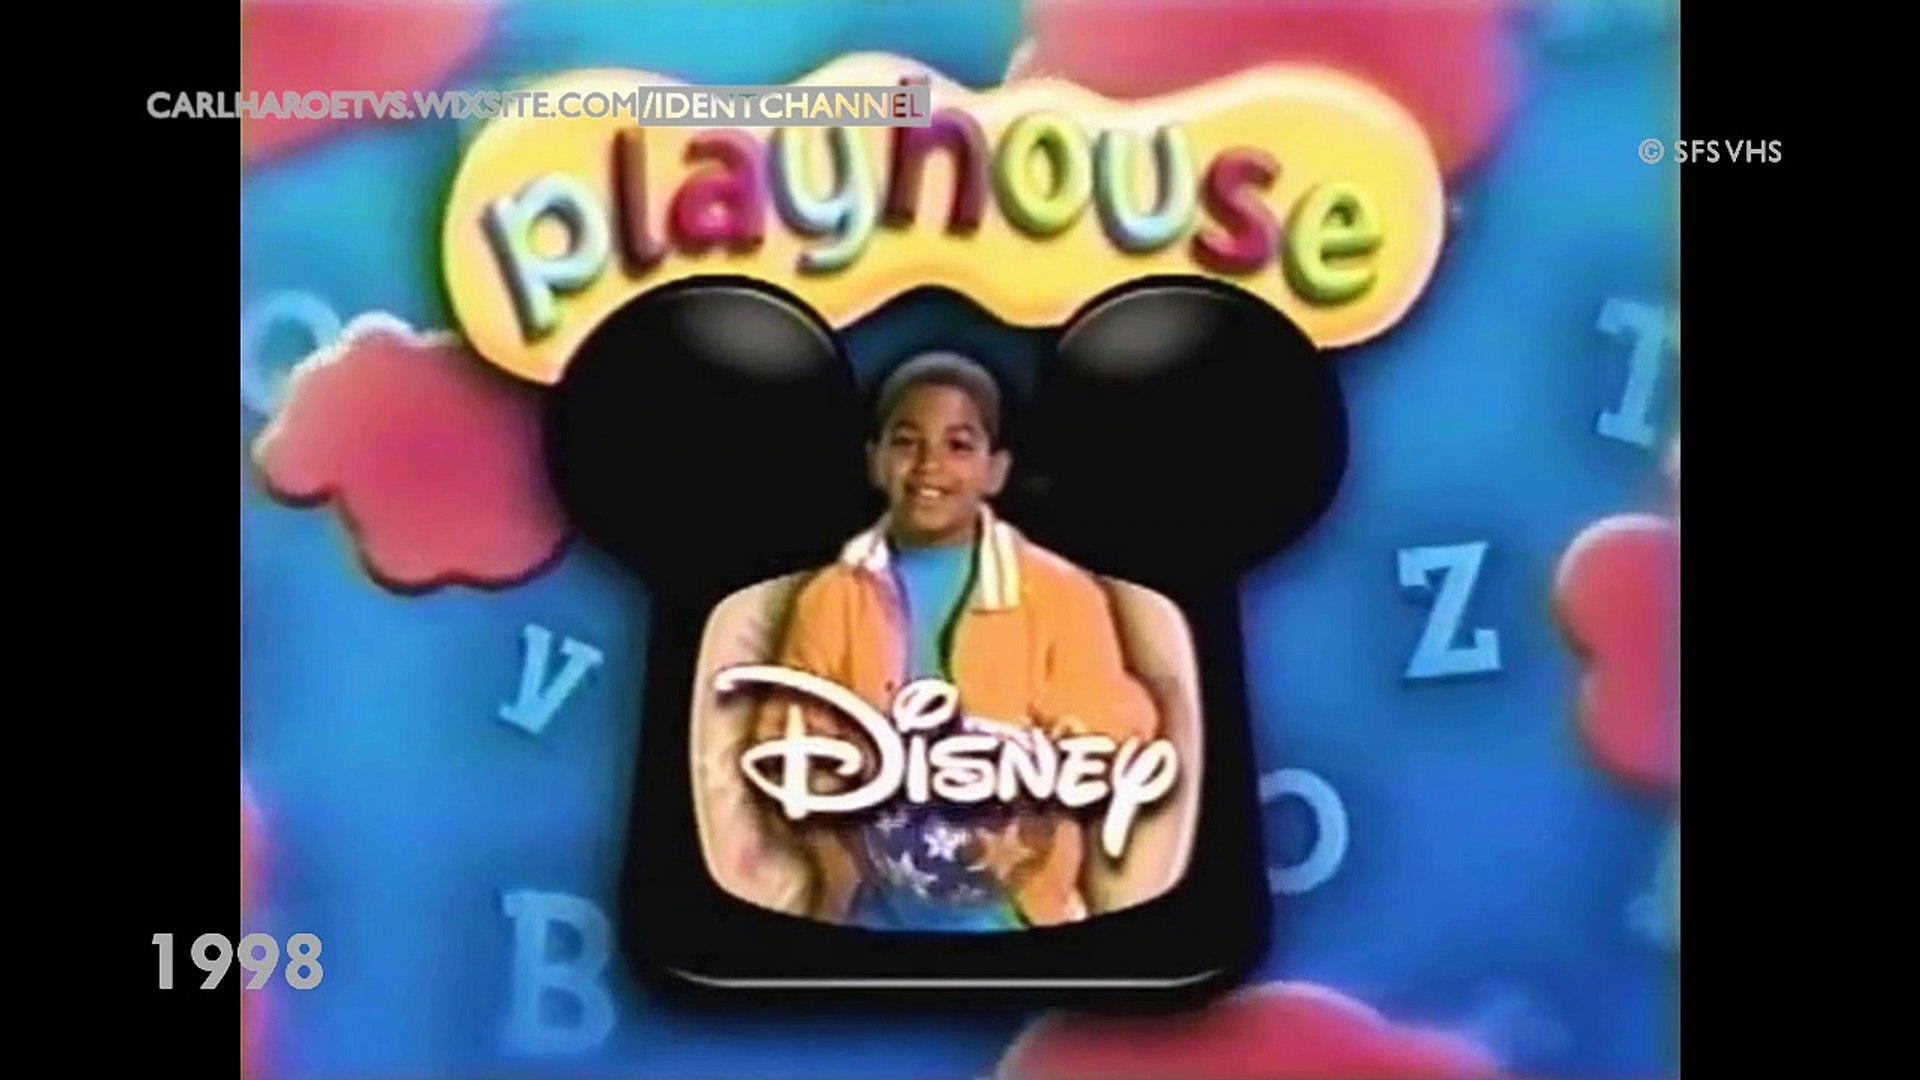 Disney Junior United States Formerly Playhouse Disney 1998 2011 Video Dailymotion